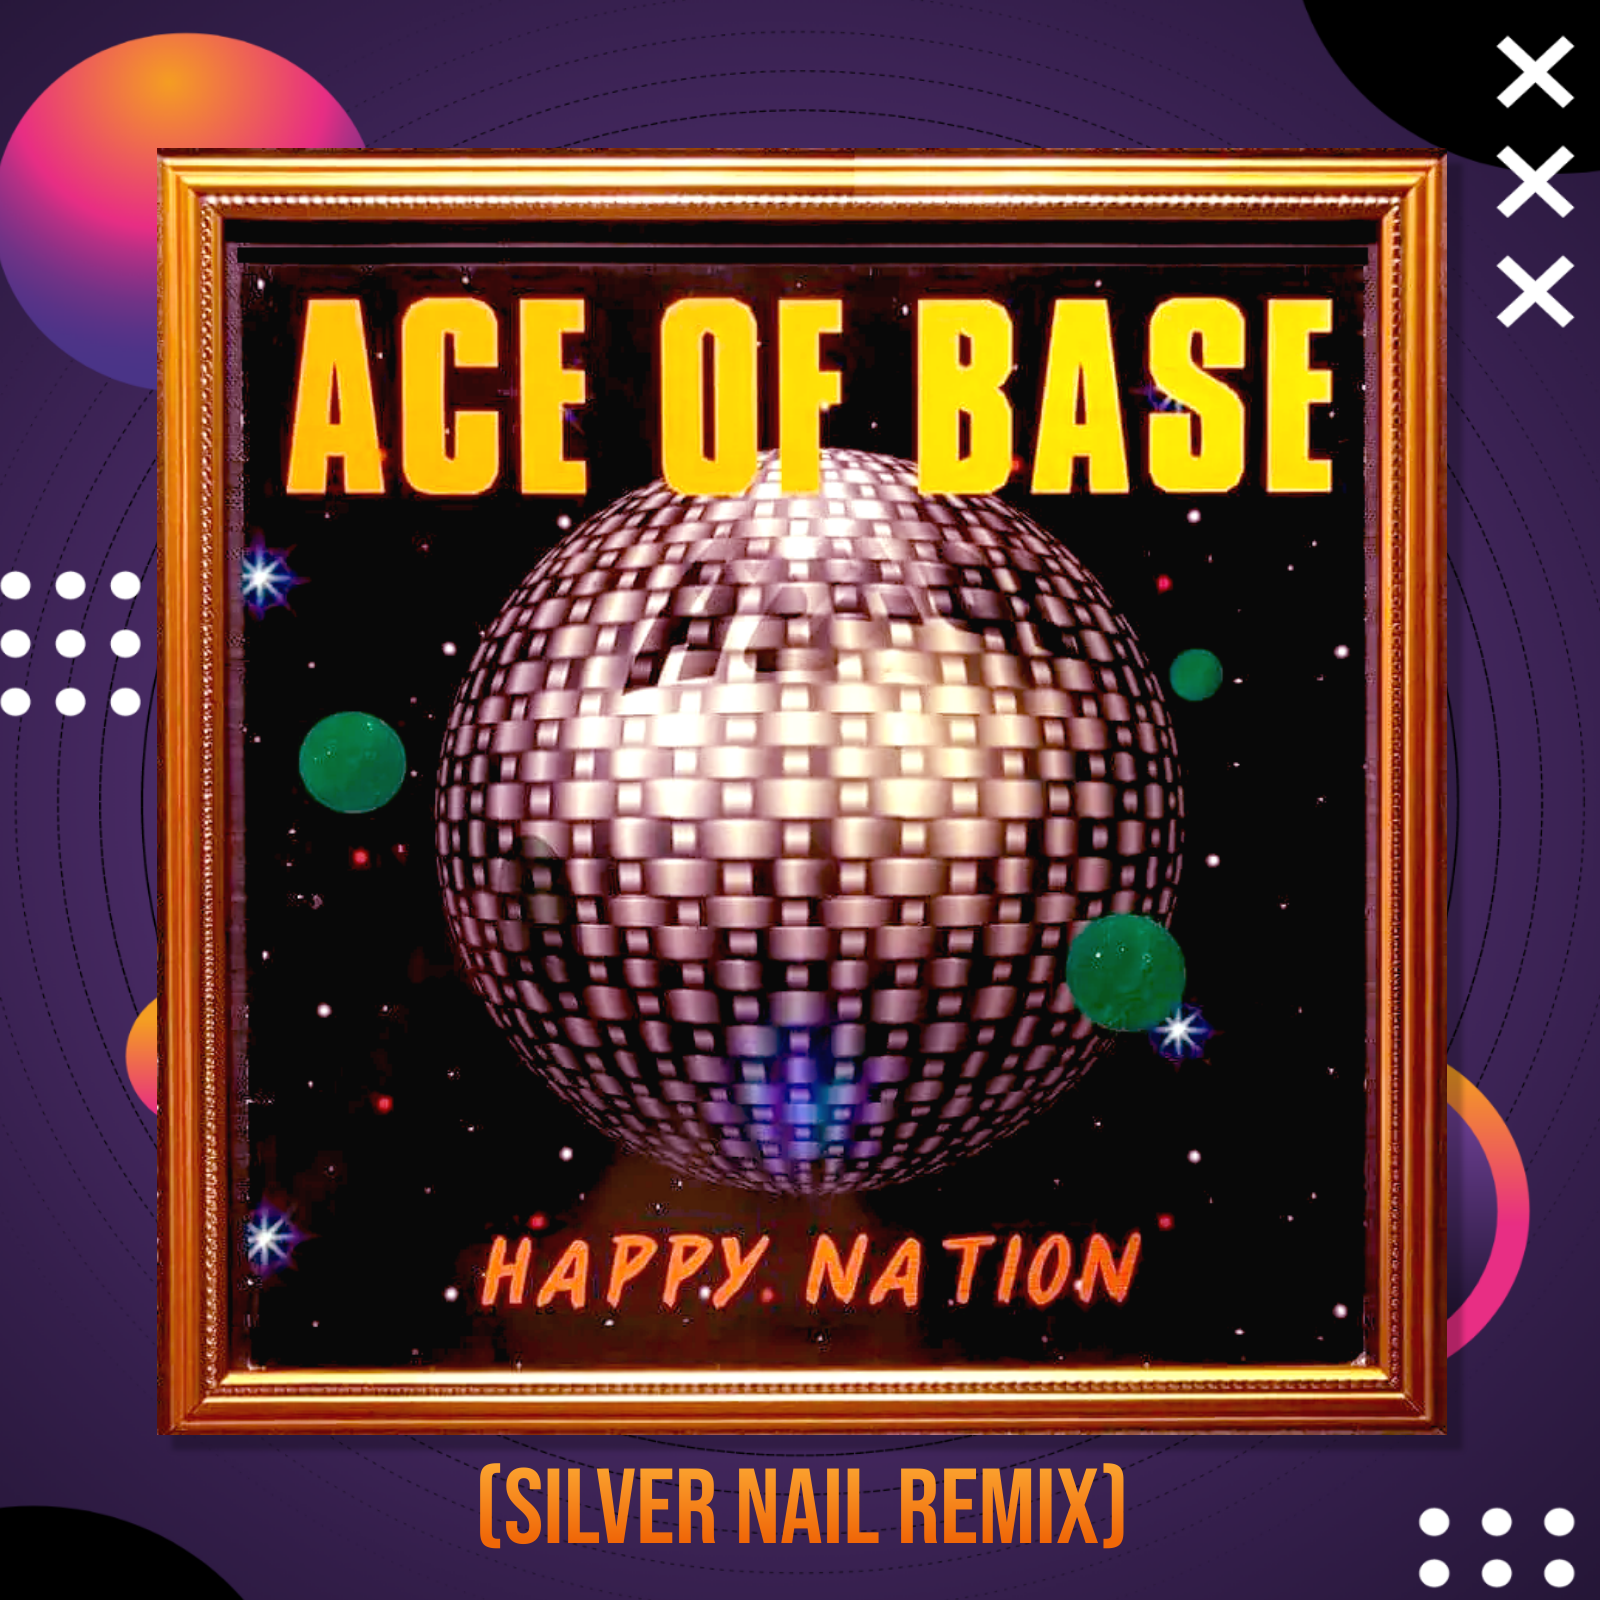 Happy nation рингтон. Хэппи натион. Happy Nation обложка. Ace of Base Happy Nation обложка. Хапи нецшег.